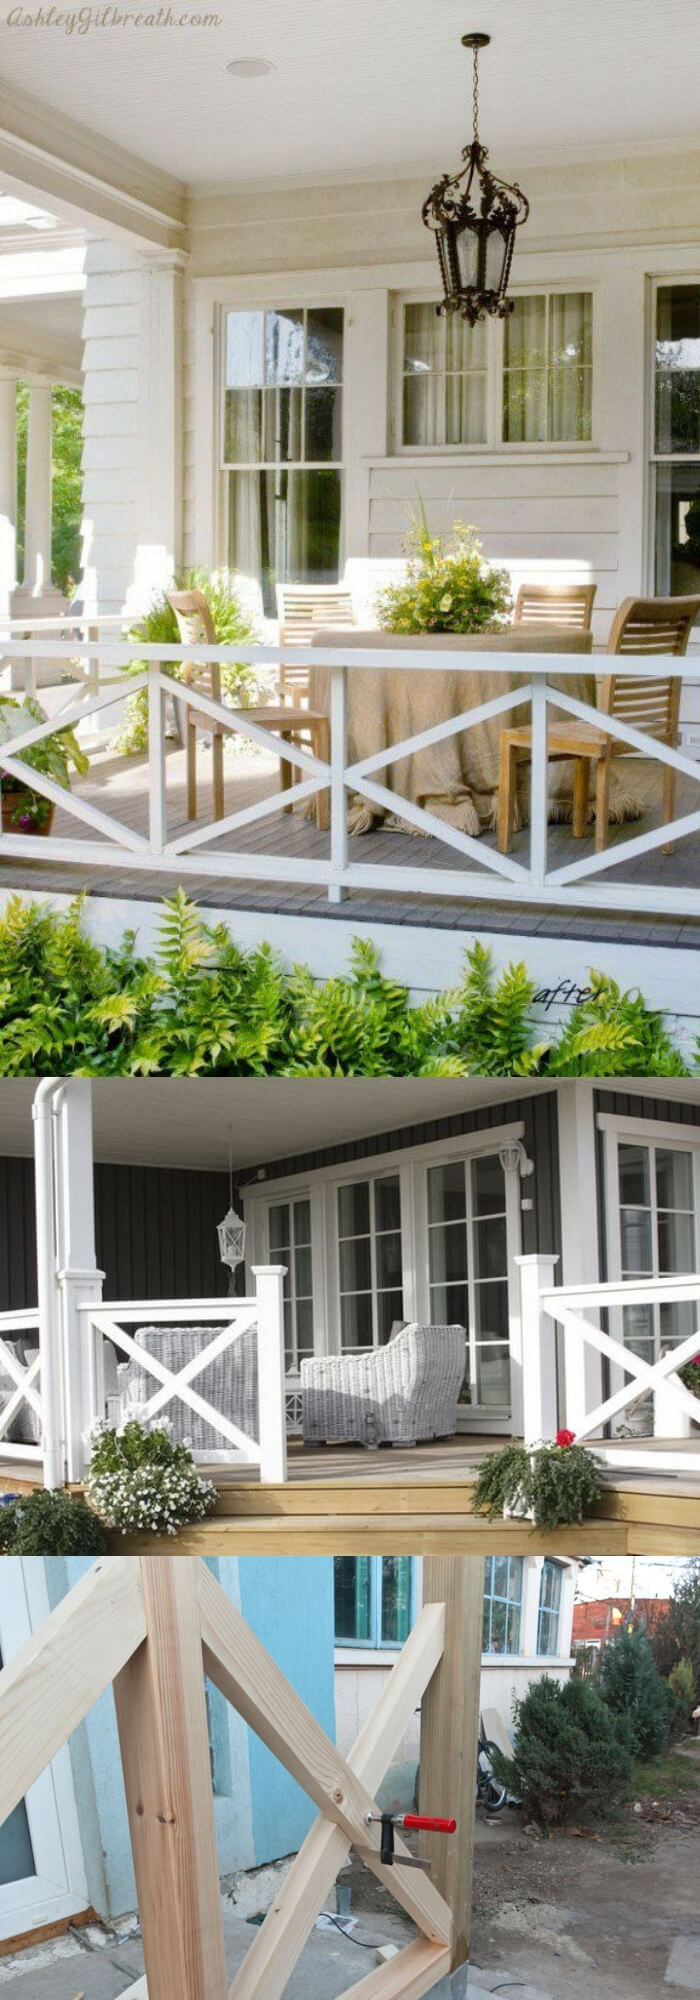 30 Awesome Diy Deck Railing Designs Ideas For 2021